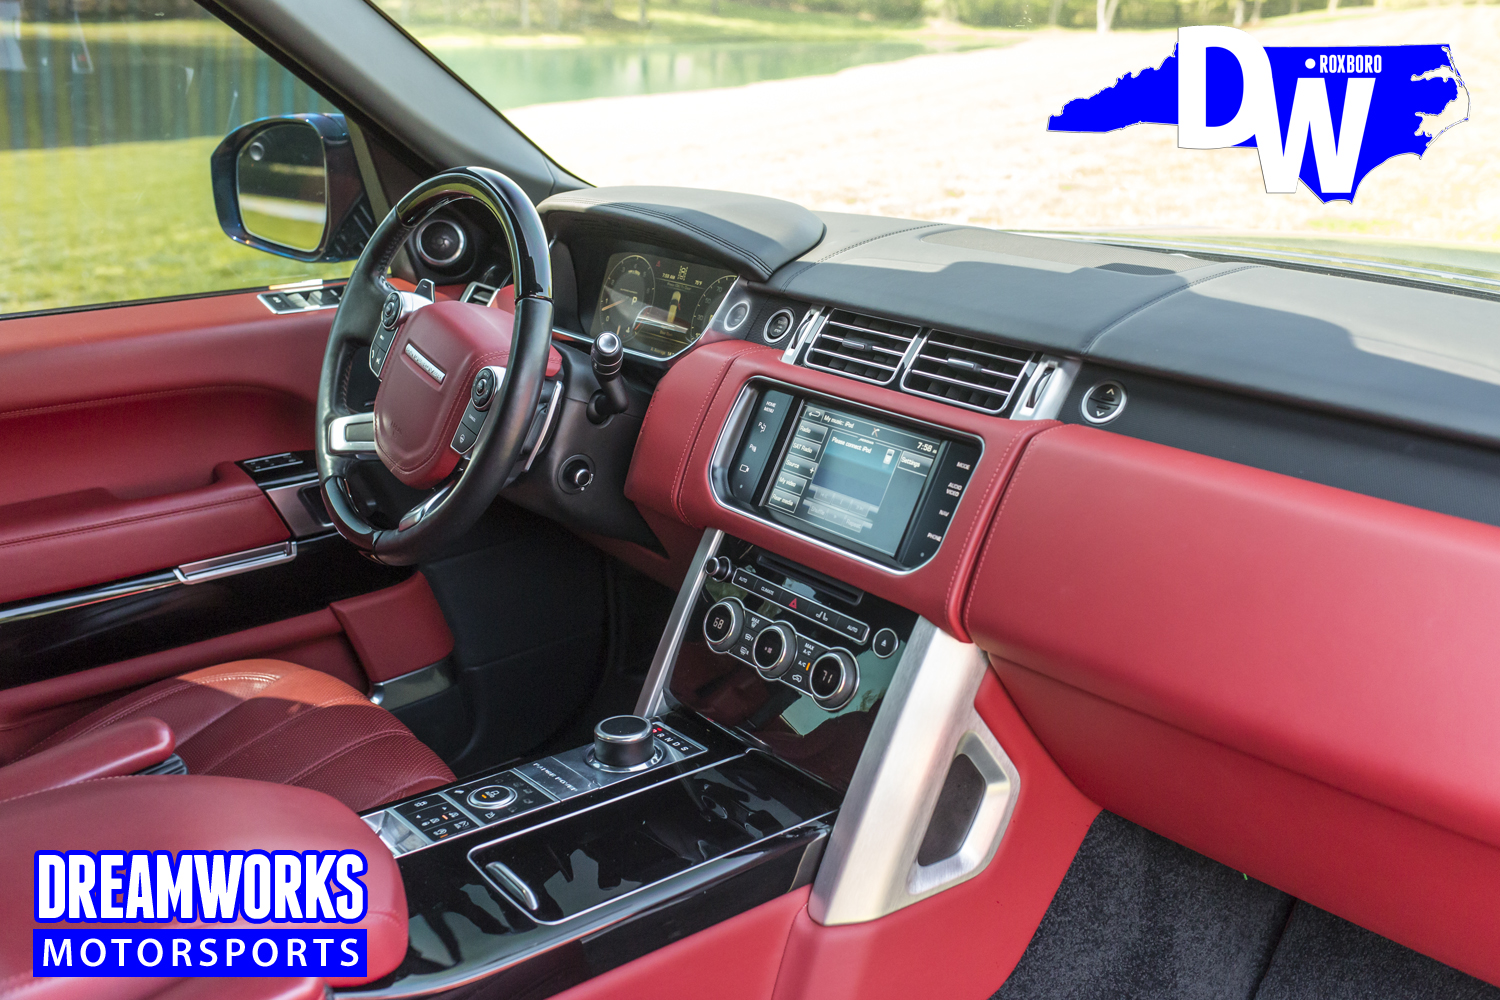 Satin-Black-Range-Rover-Dreamworks-Motorsports-interior-4.jpg